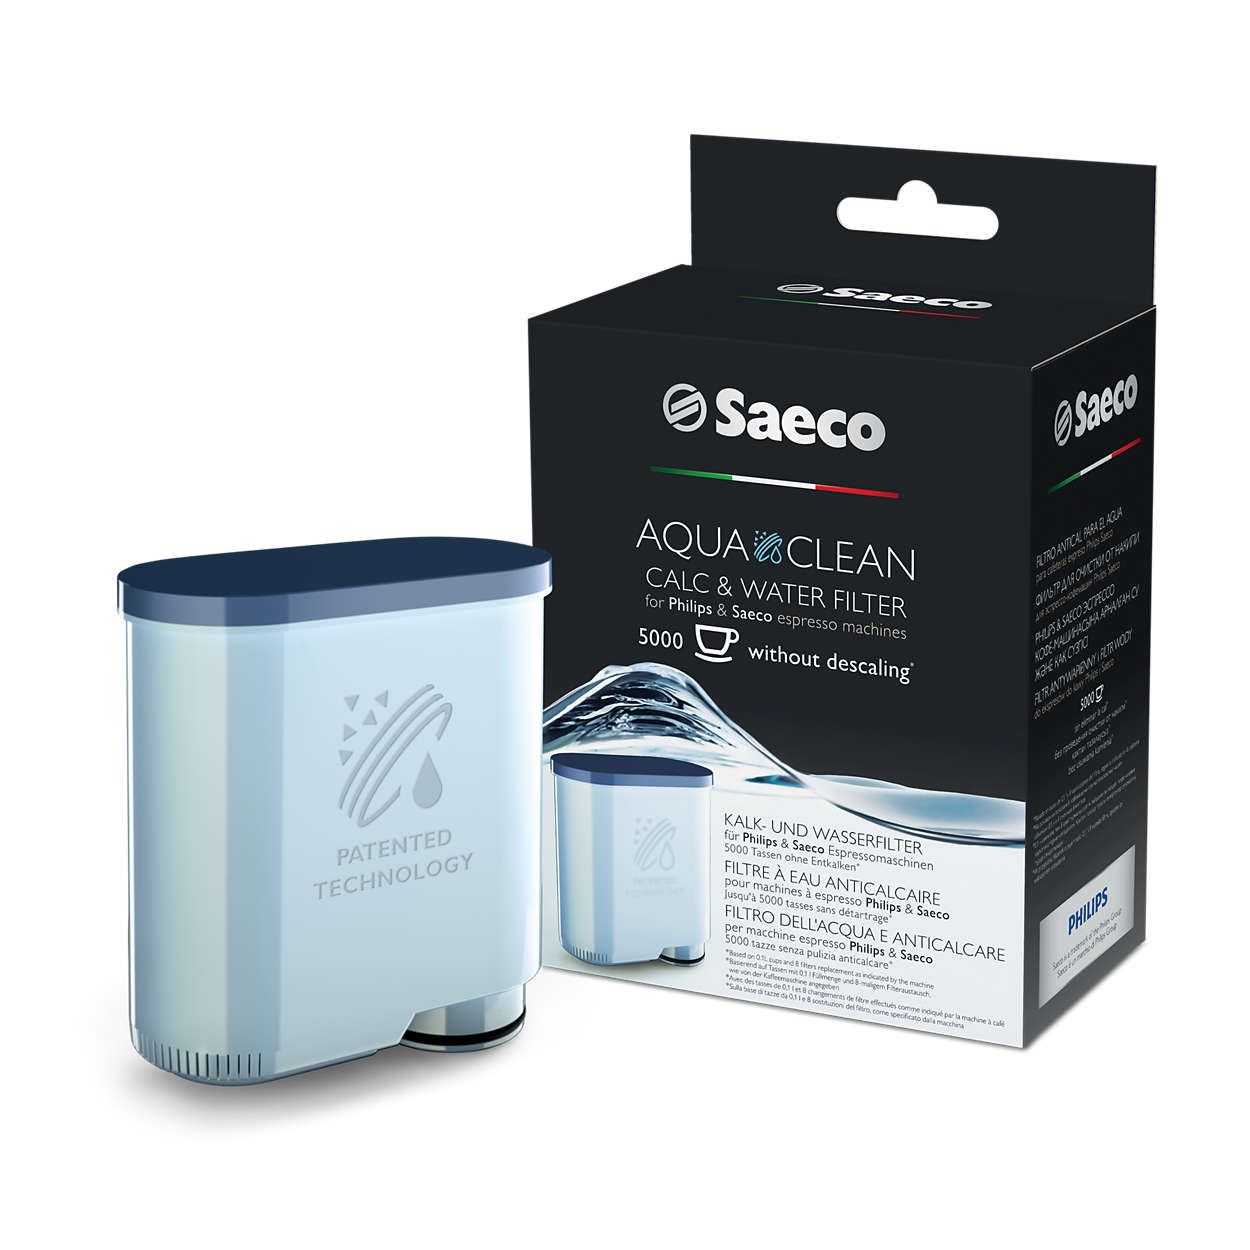 Wessper AquaClear WES040 filtro anticalcare Set di 6 filtri dellacqua per macchina da caffè Saeco e Philips AquaClean CA6903/10 CA6903/22 CA6903 